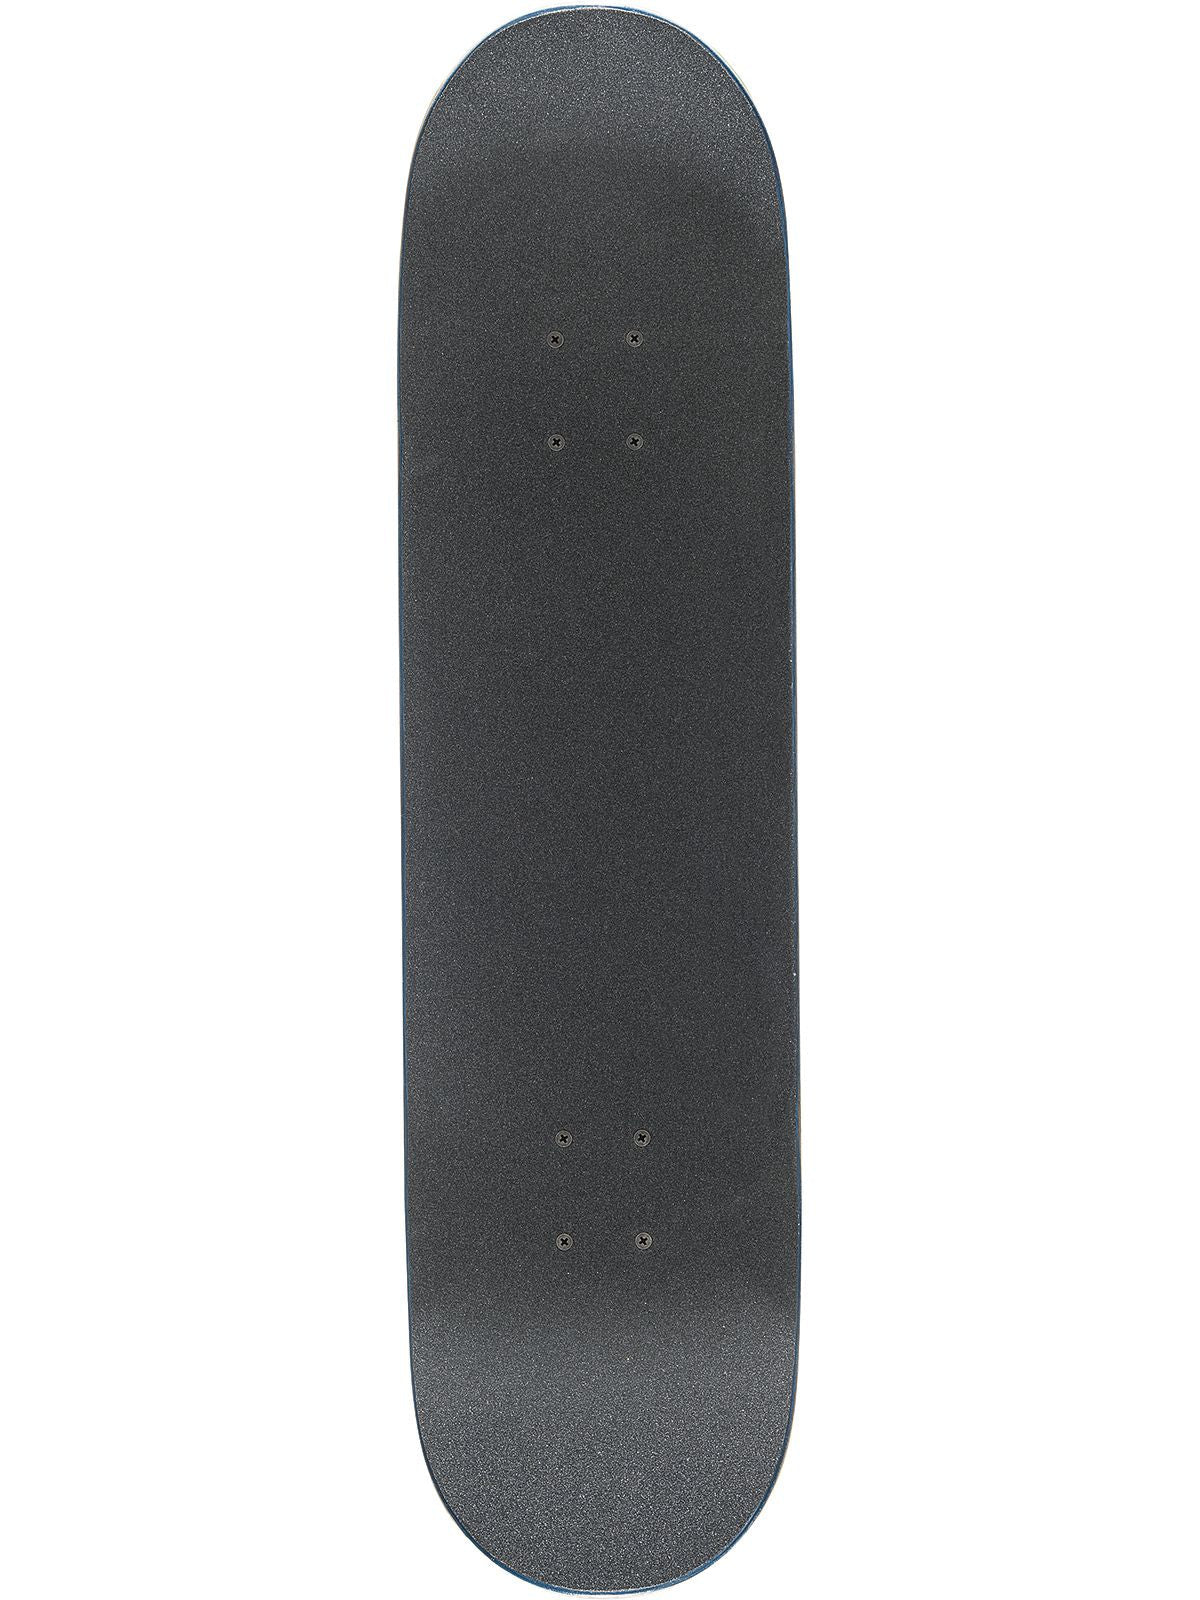 G1 Varsity 8.125 inch Skateboard Complete - Melbourne